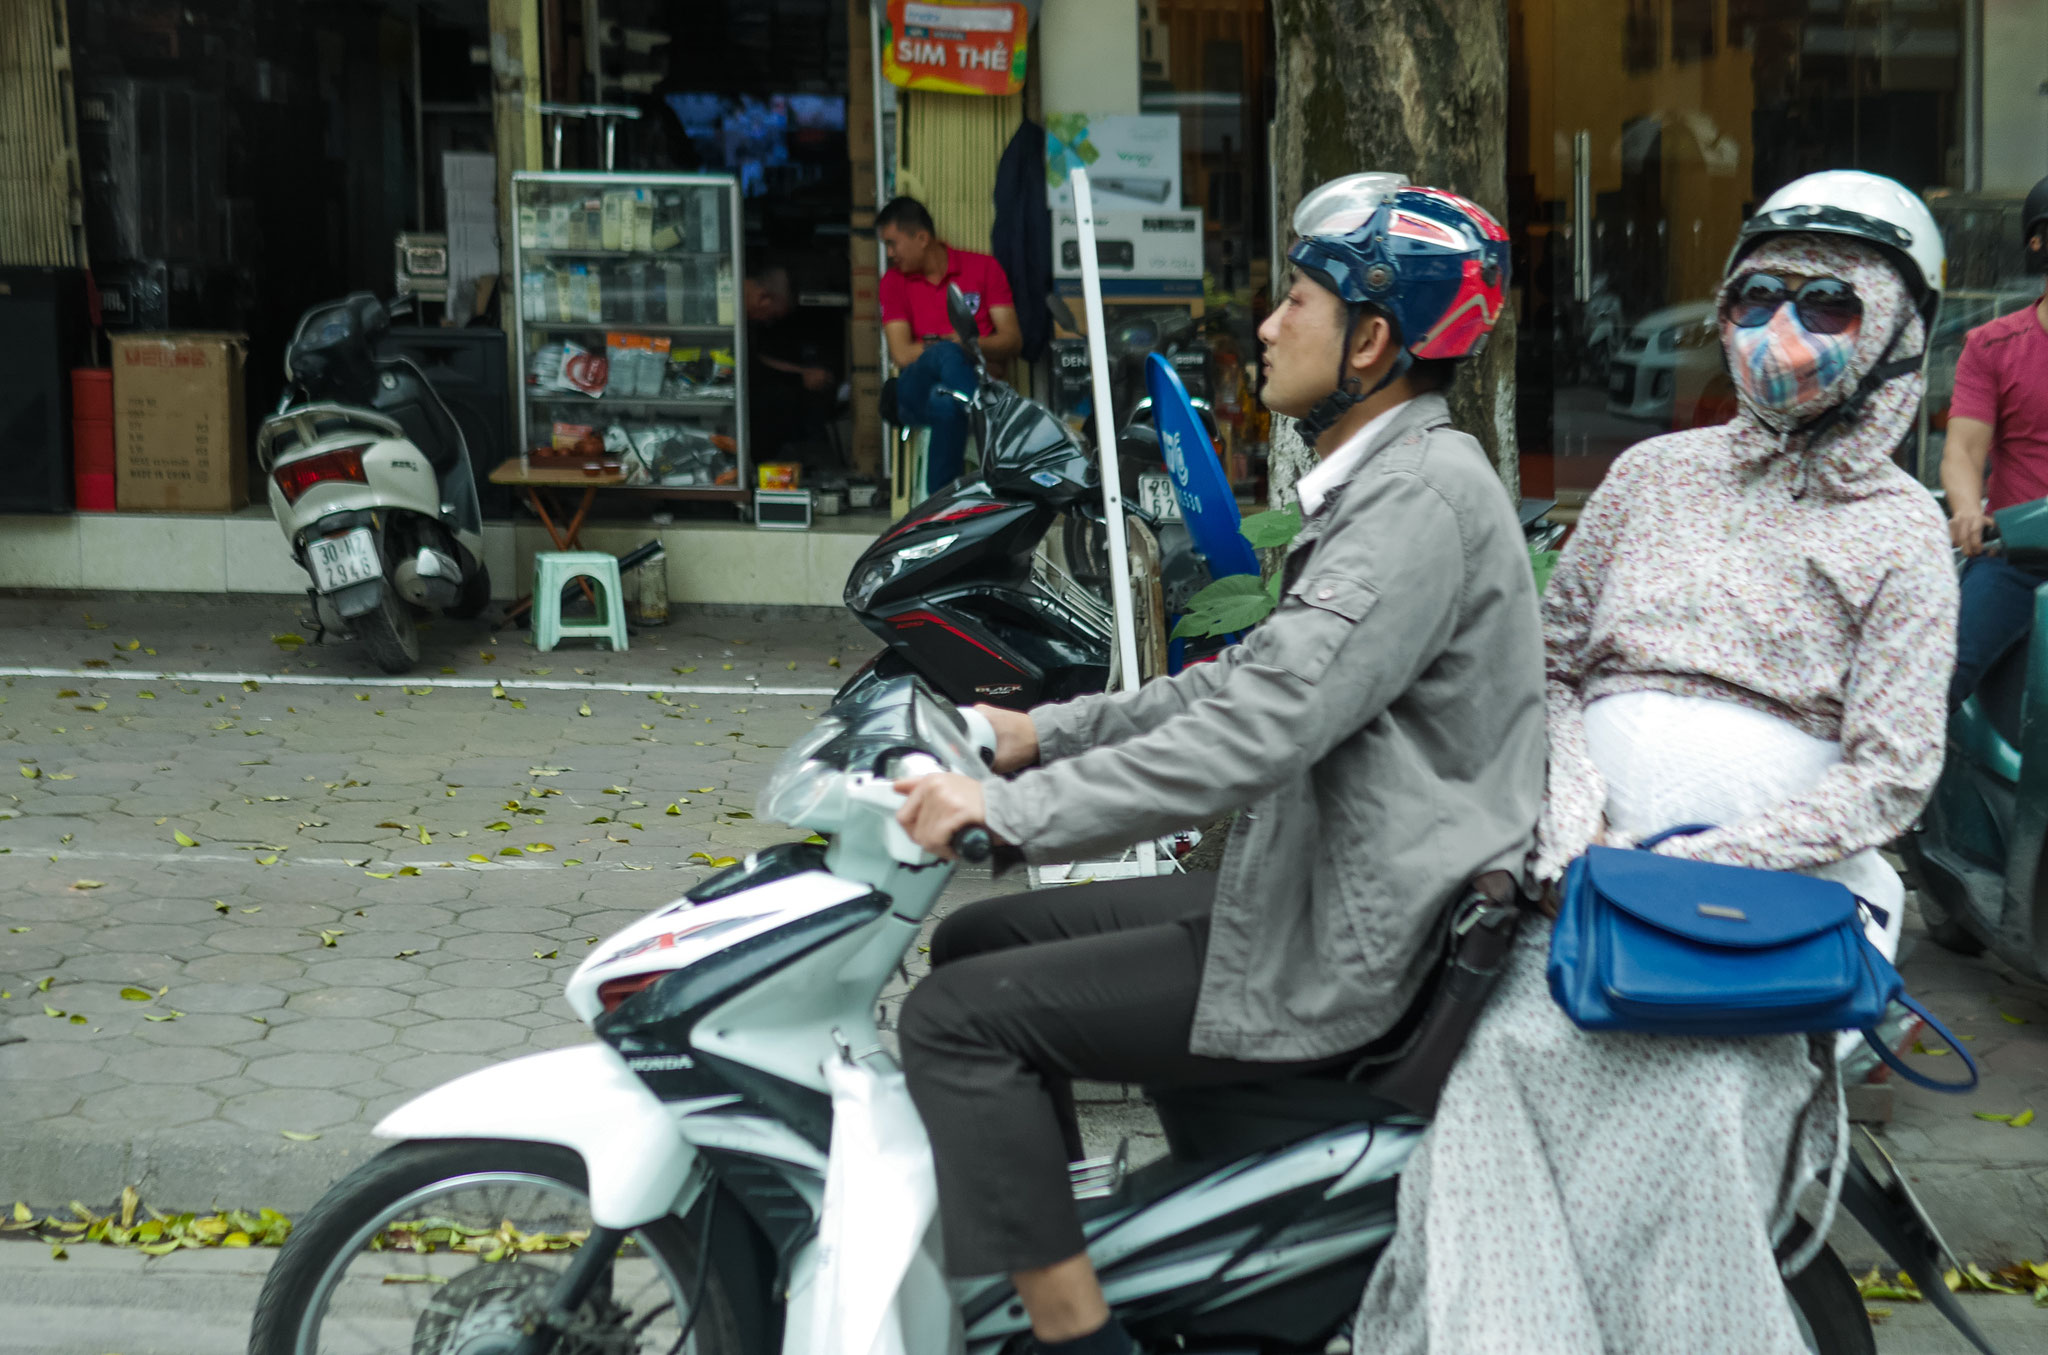 Rückweg von Mai Chau nach Hanoi - diese Mopedfahrer :)